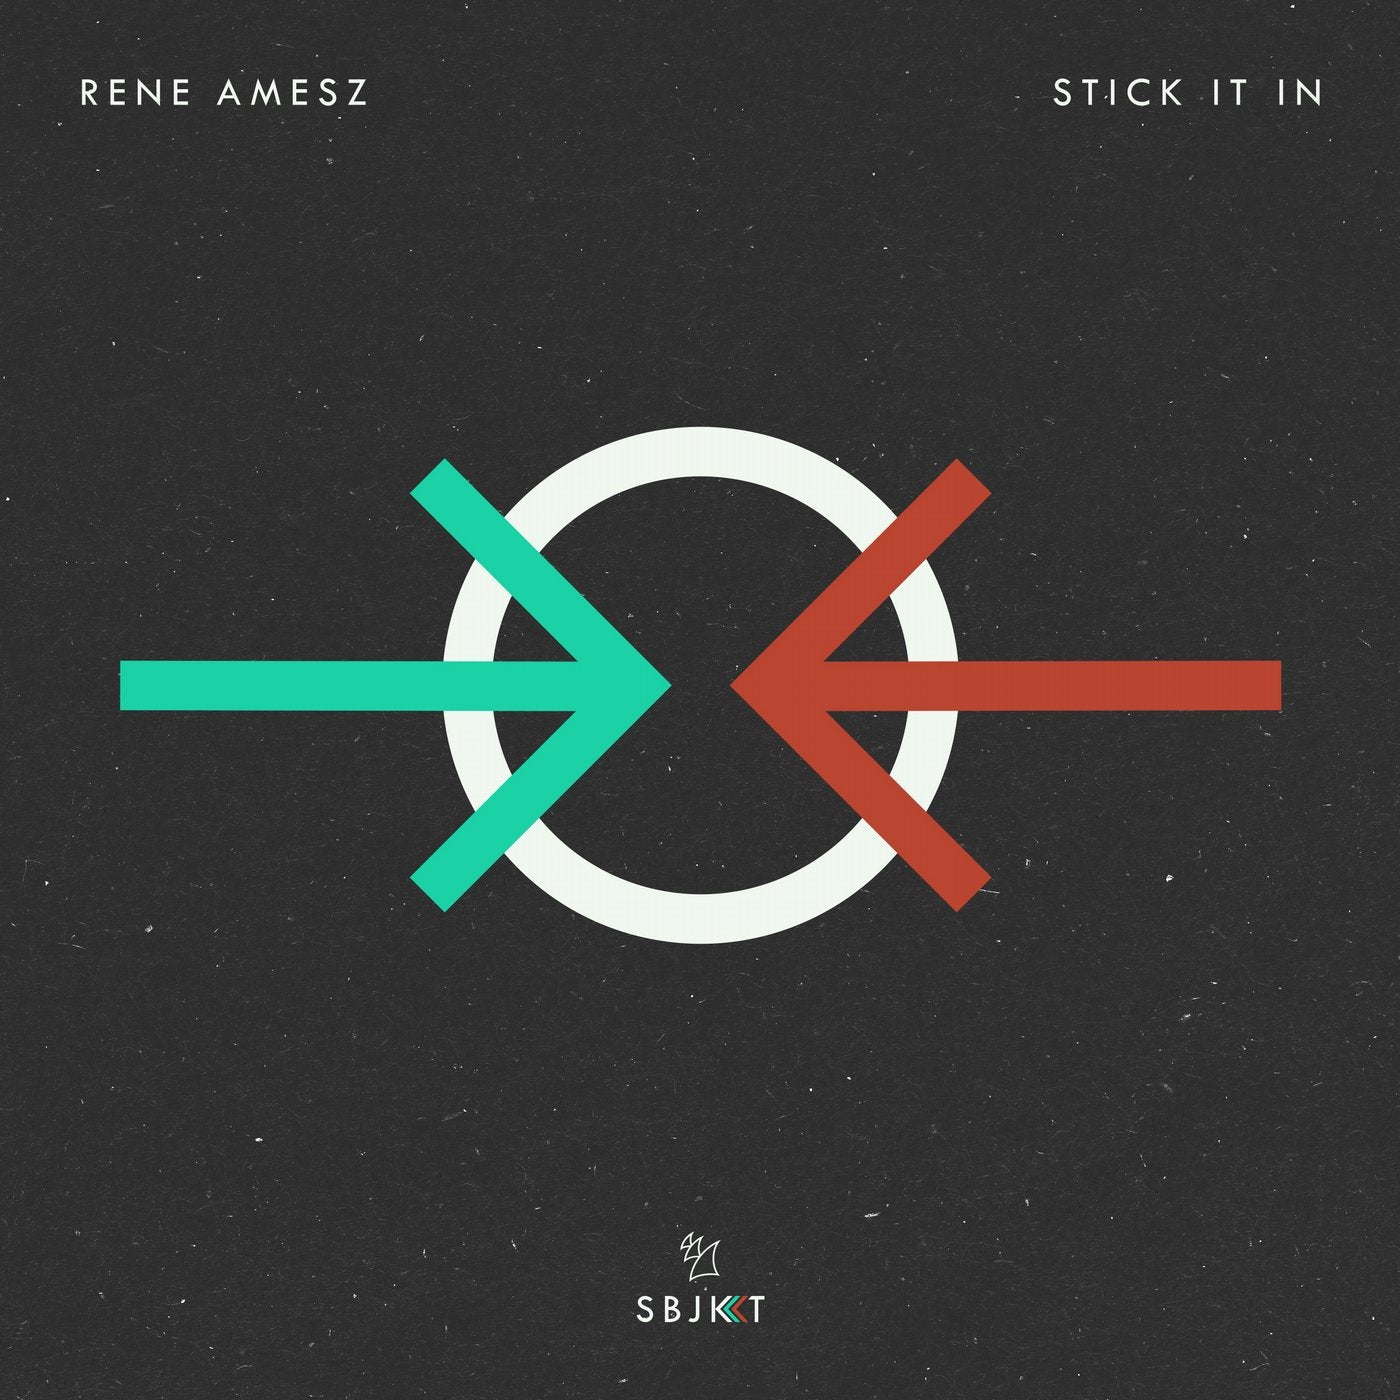 Rene Amesz music download - Beatport